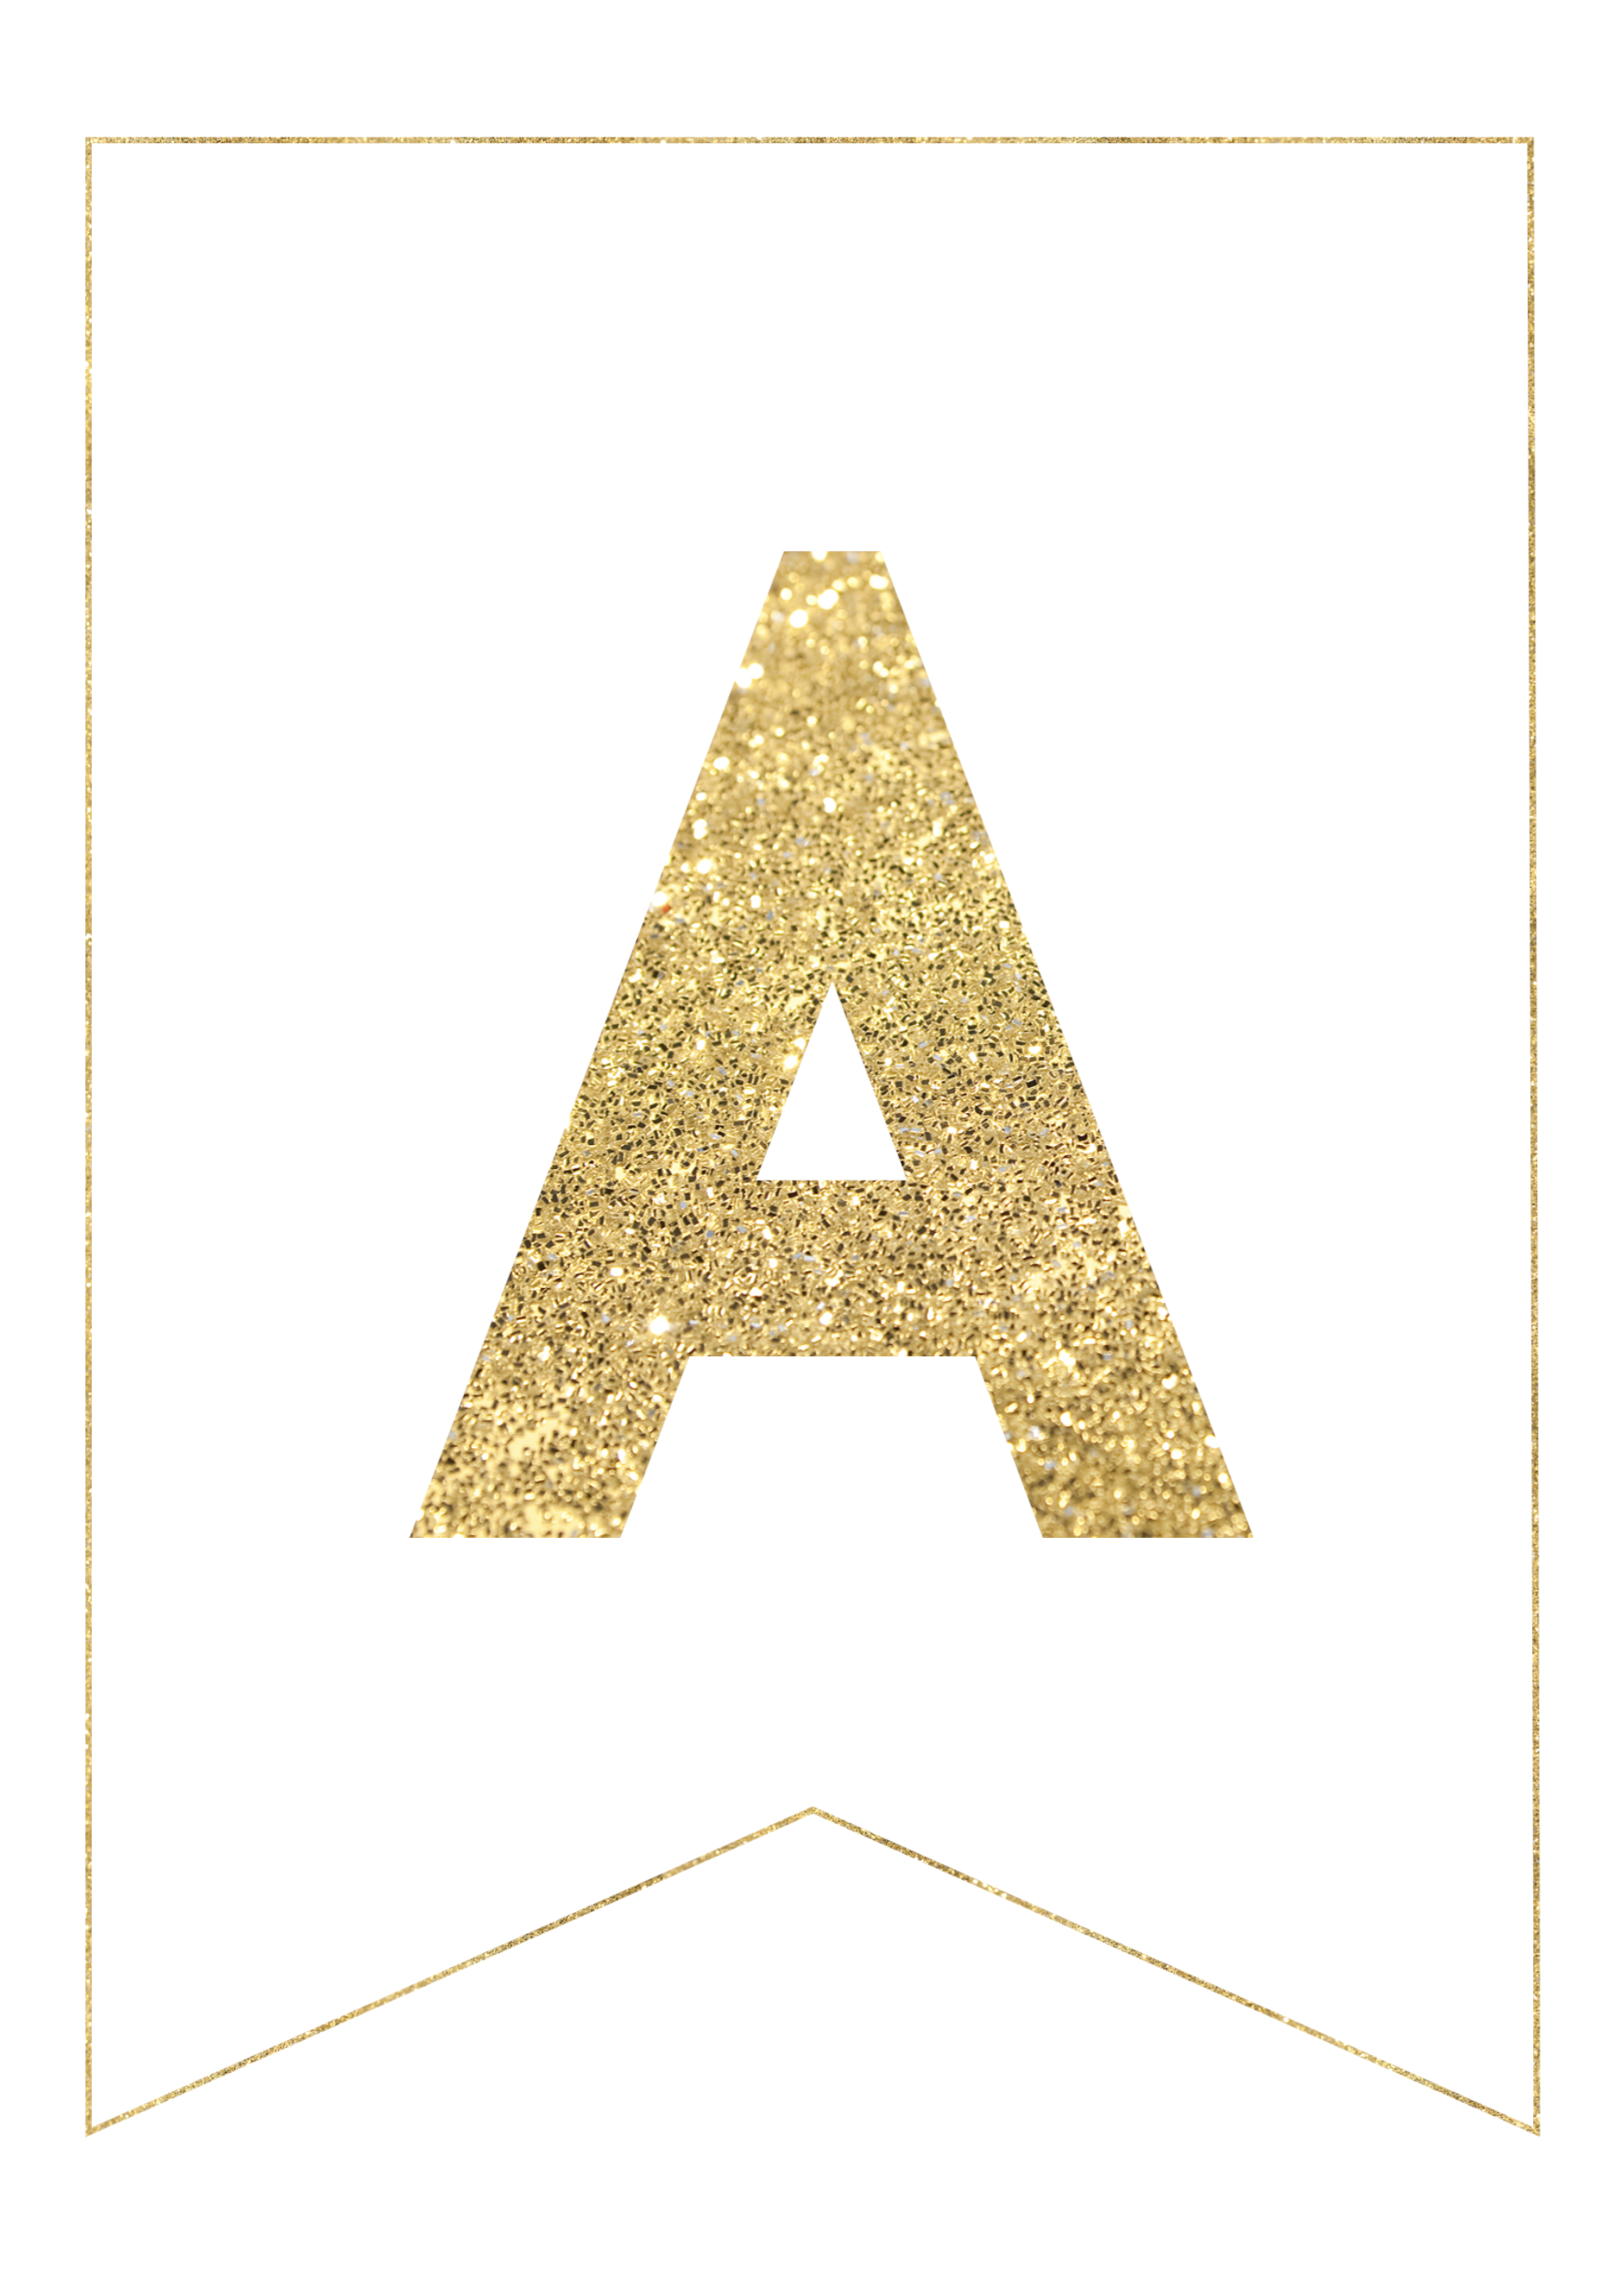 golden letter a